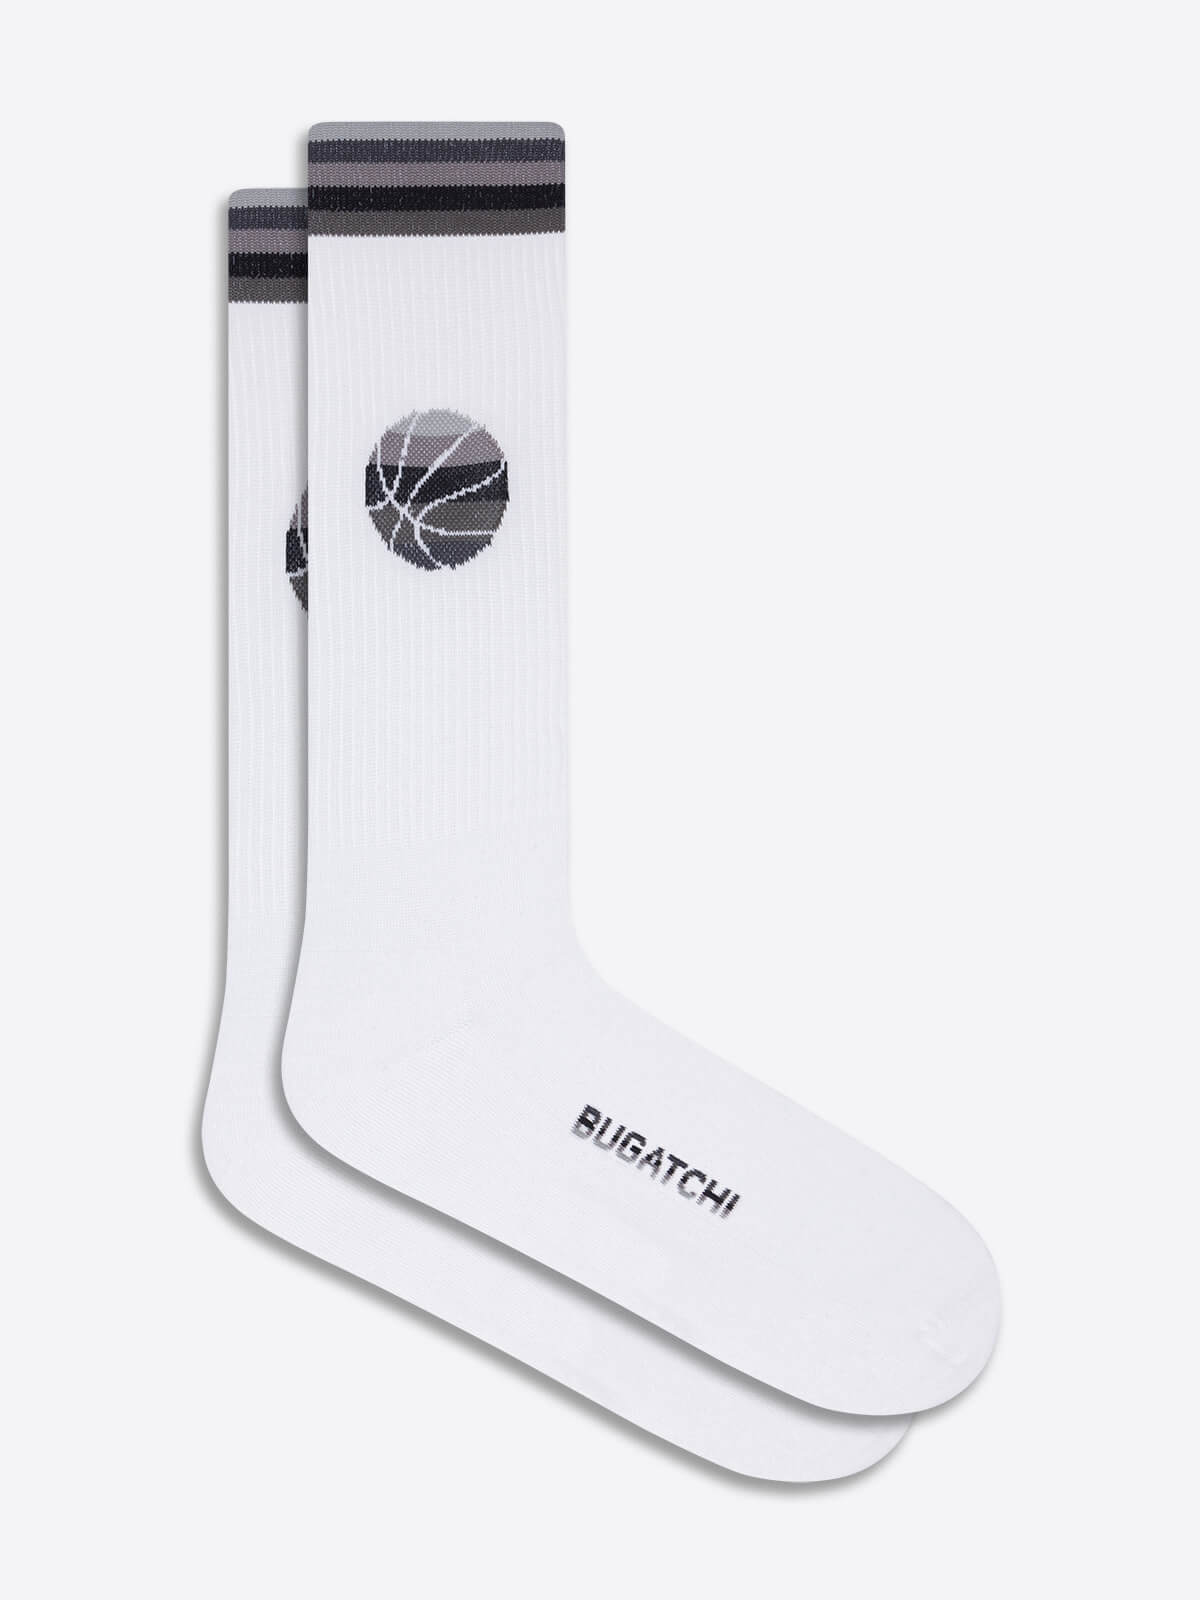 Basketball Athletic Socks